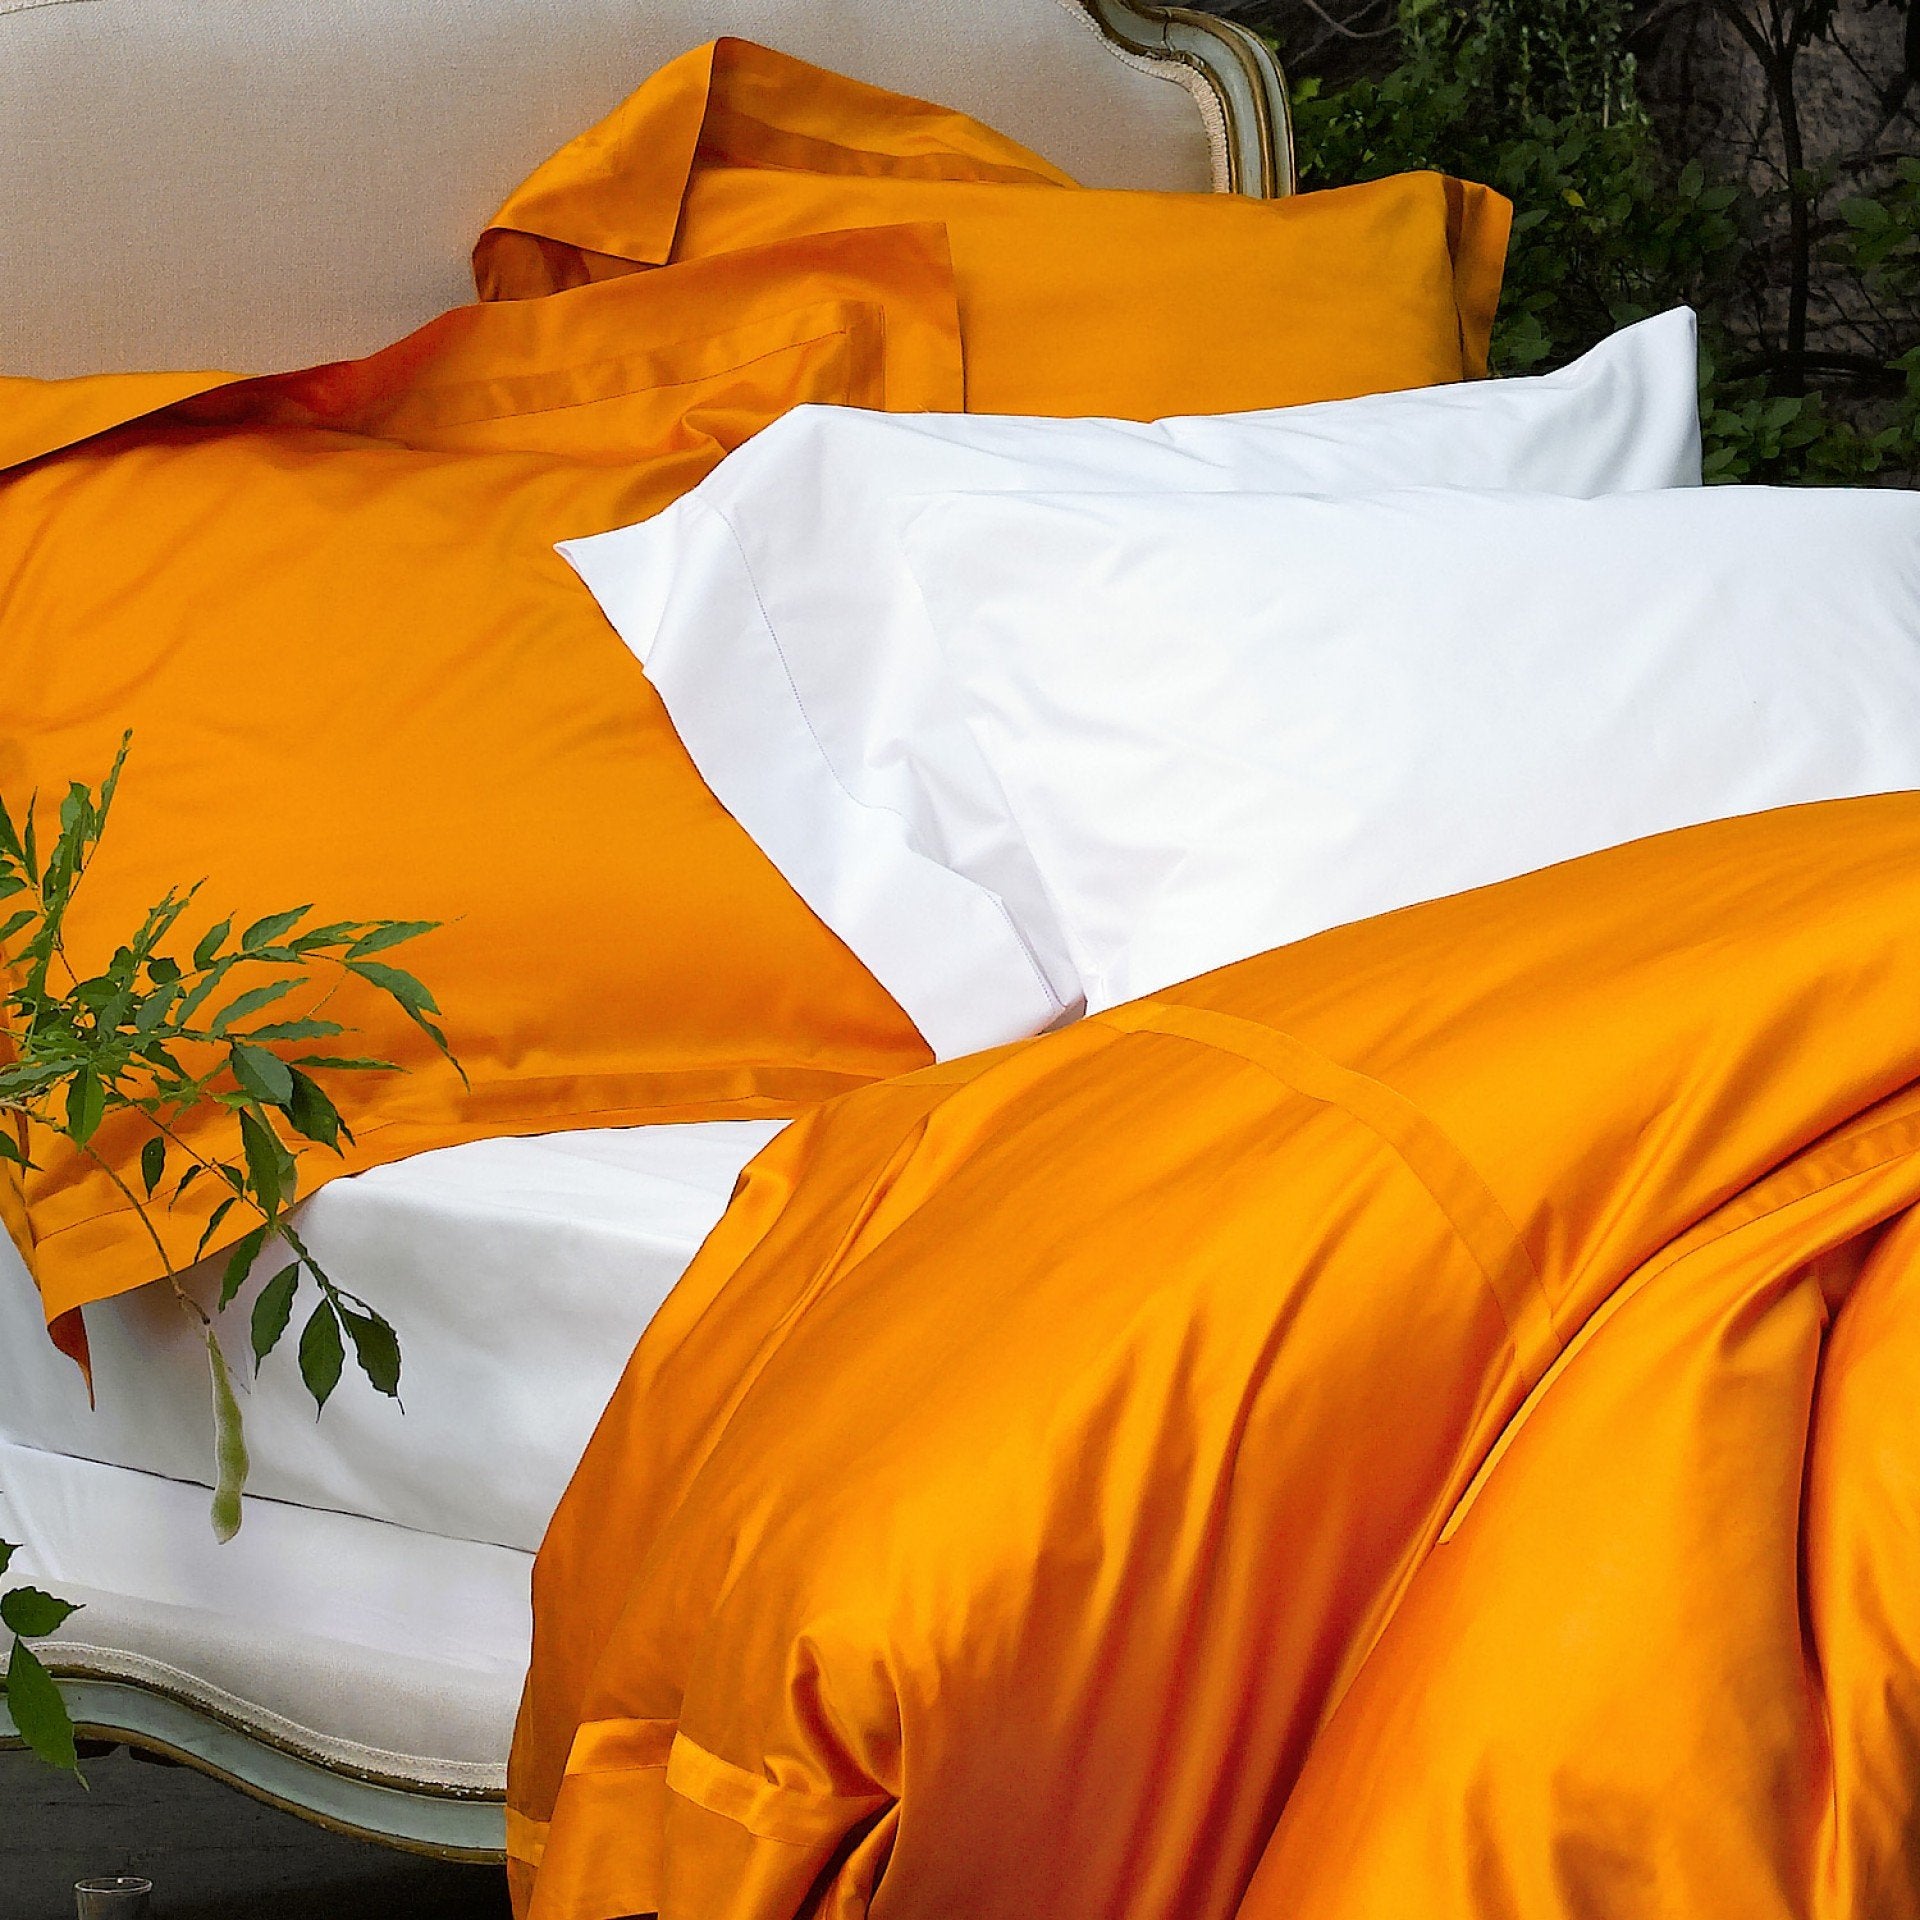 Nocturne Tangerine Orange Bed Skirts by Matouk - Fig Linens